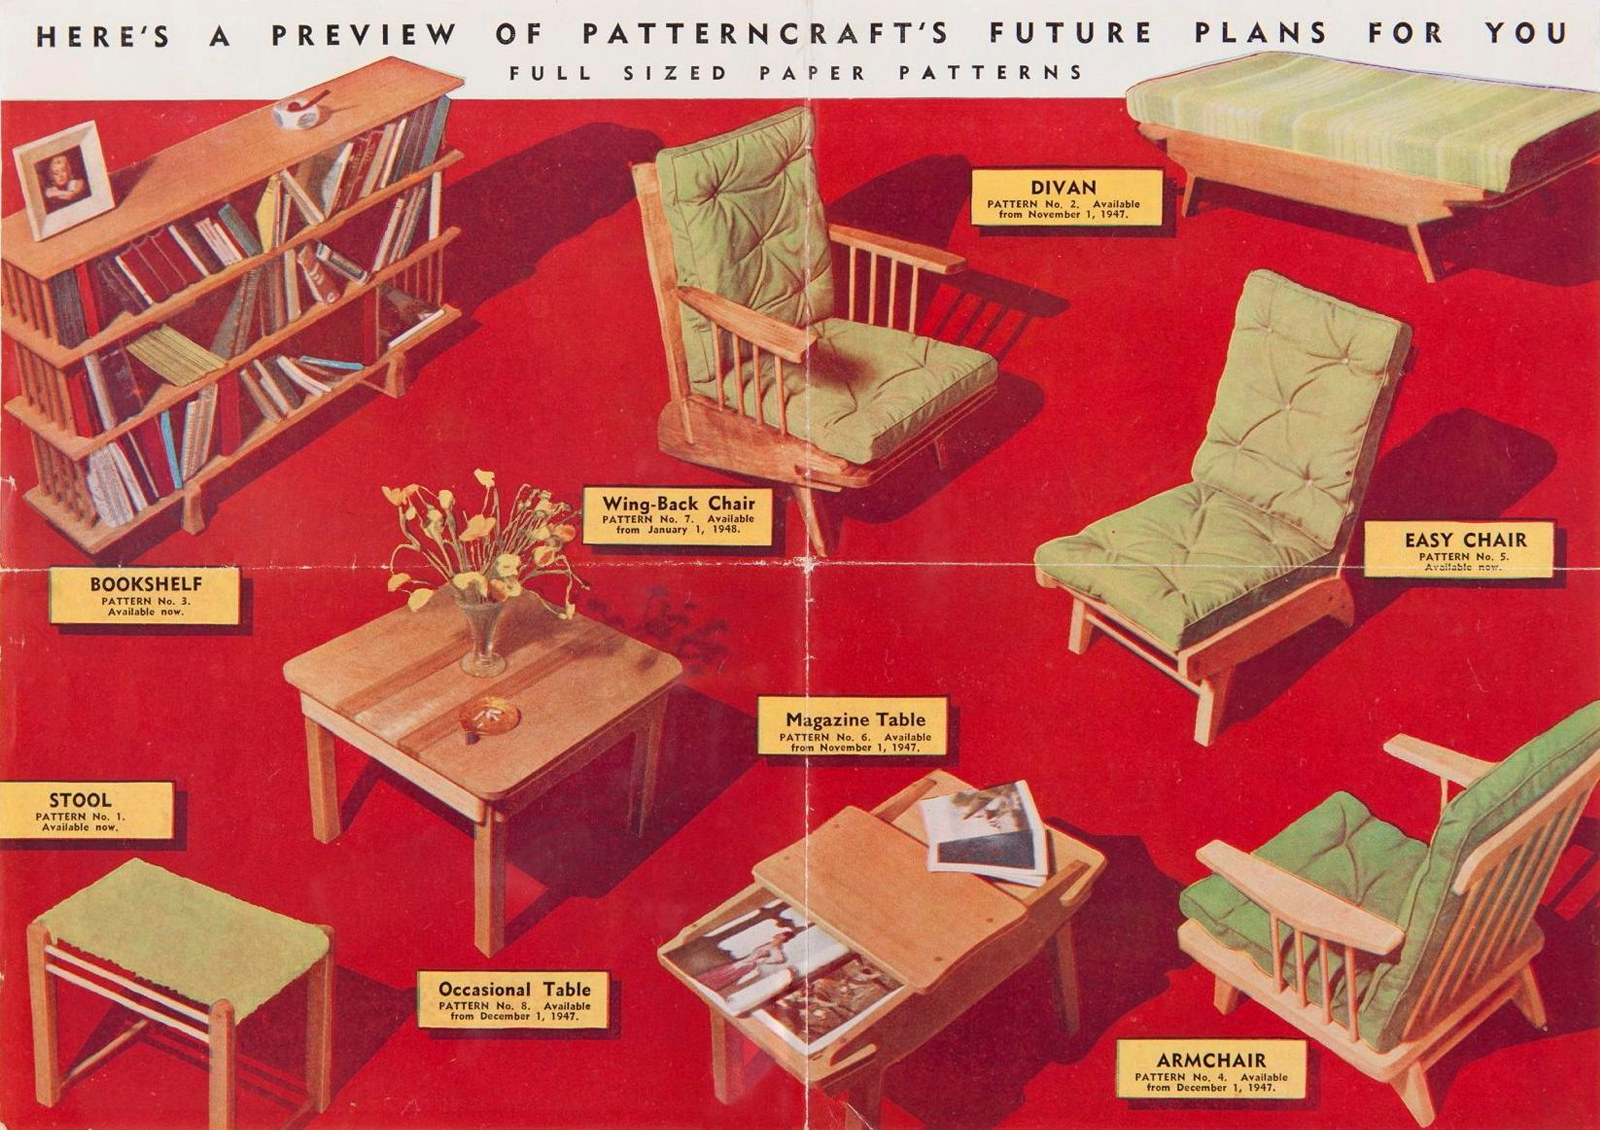 Promotional brochure for Patterncraft furniture patterns, 1947